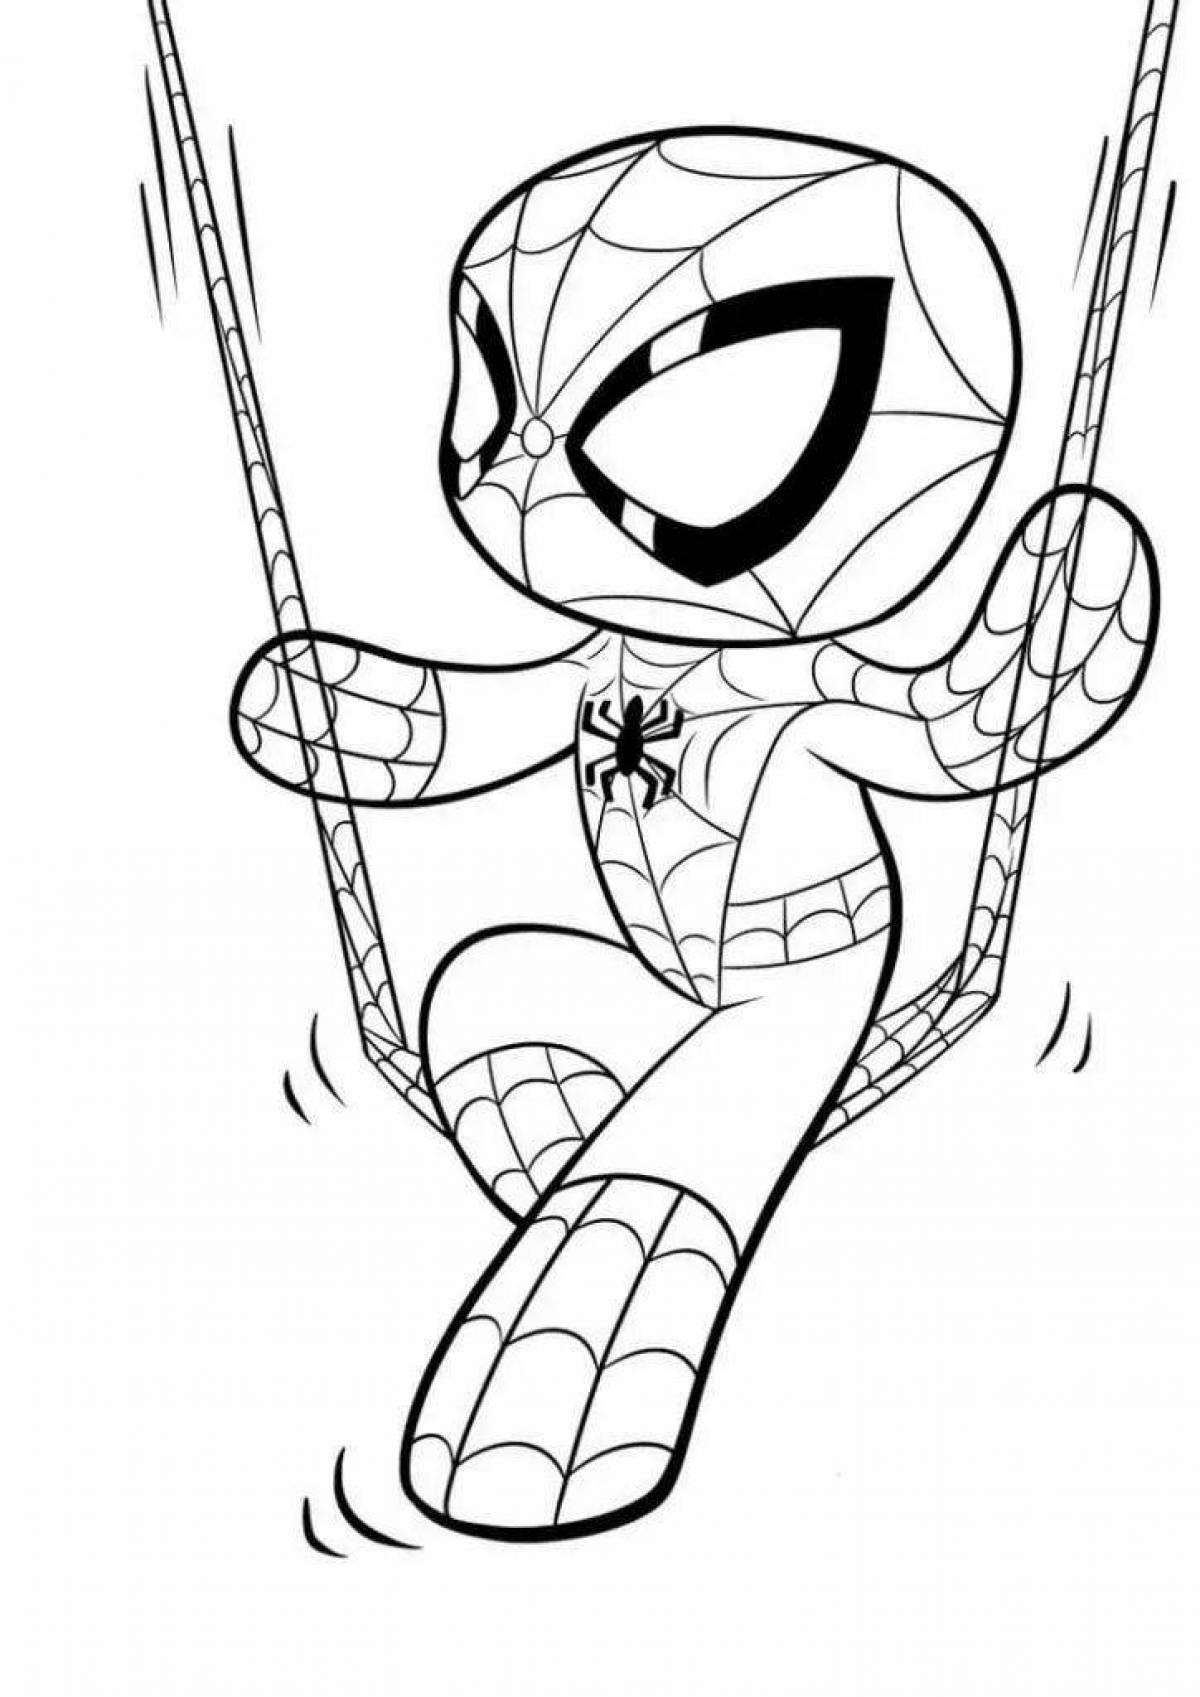 Artistic little spiderman